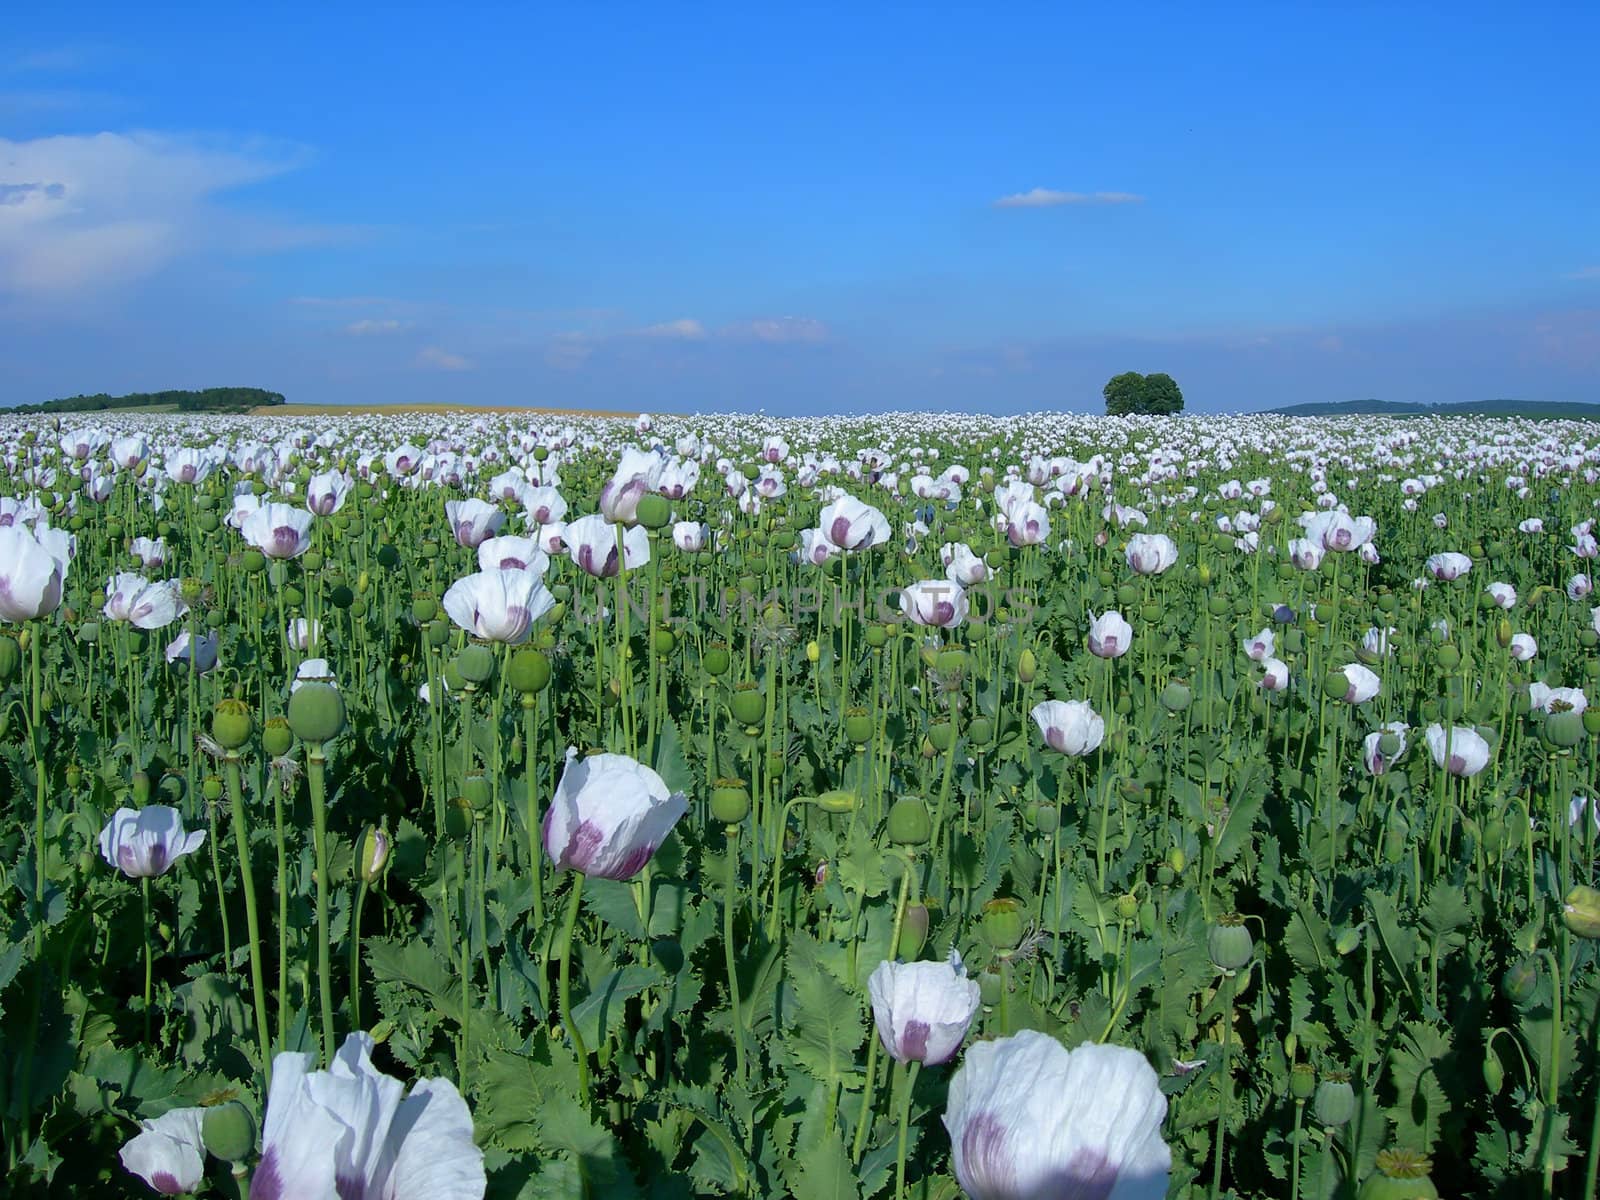 Poppy field by drakodav